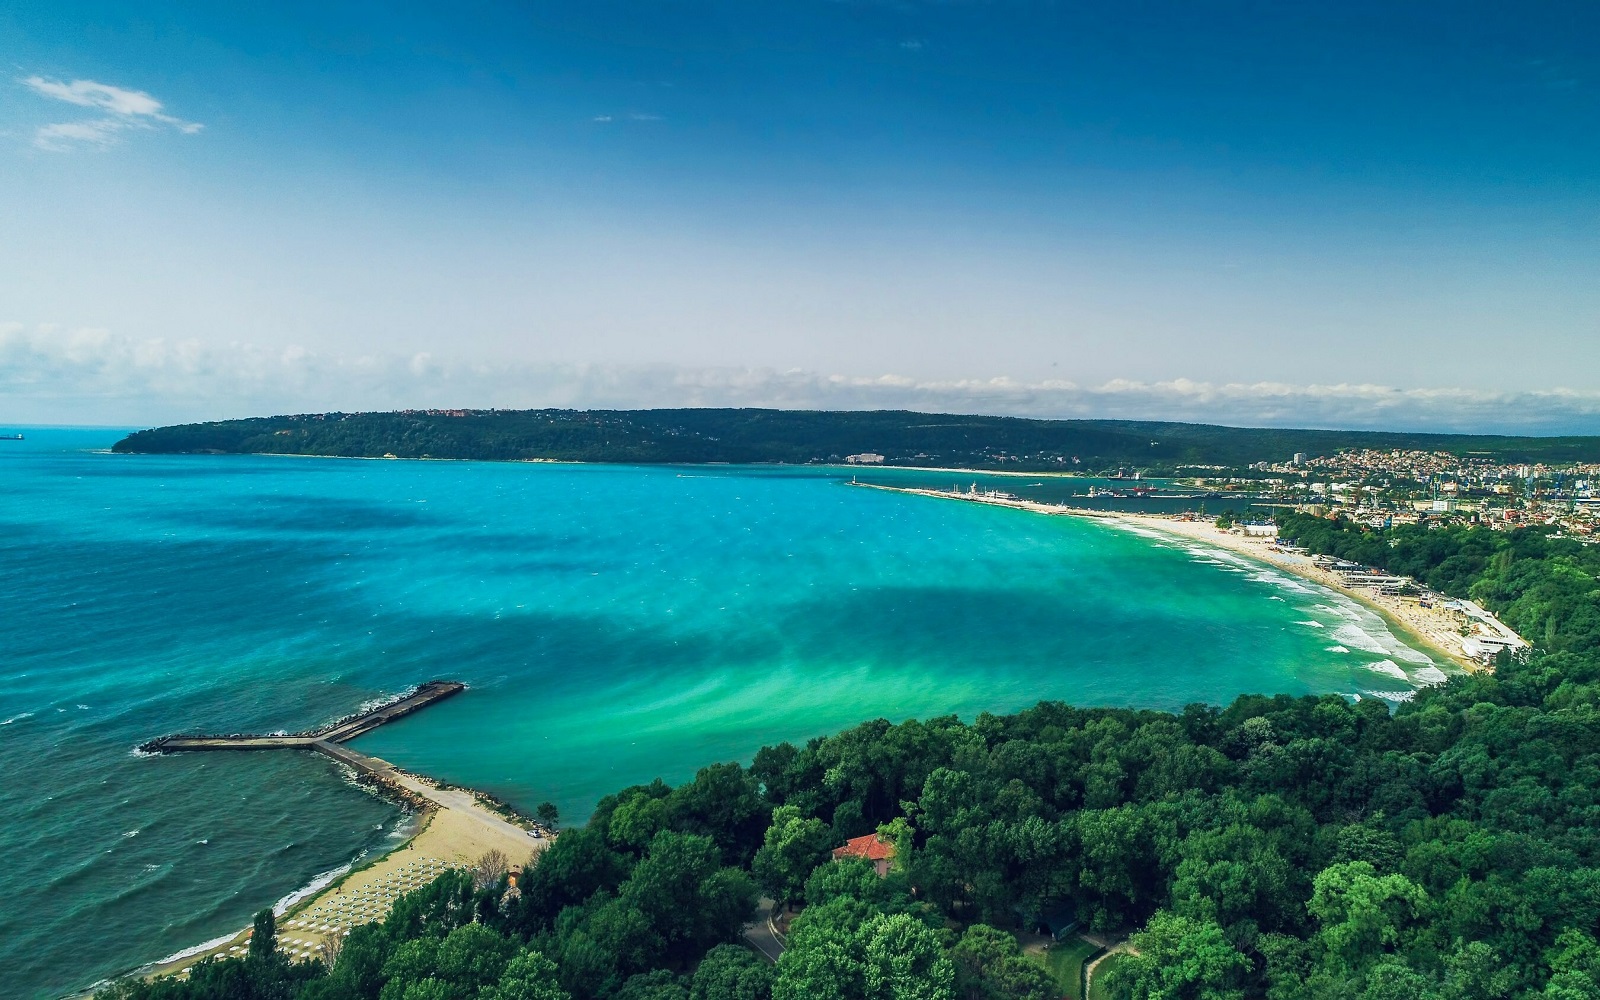 Varna coastline in Bulgaria shows turquoise ocean and sandy beaches